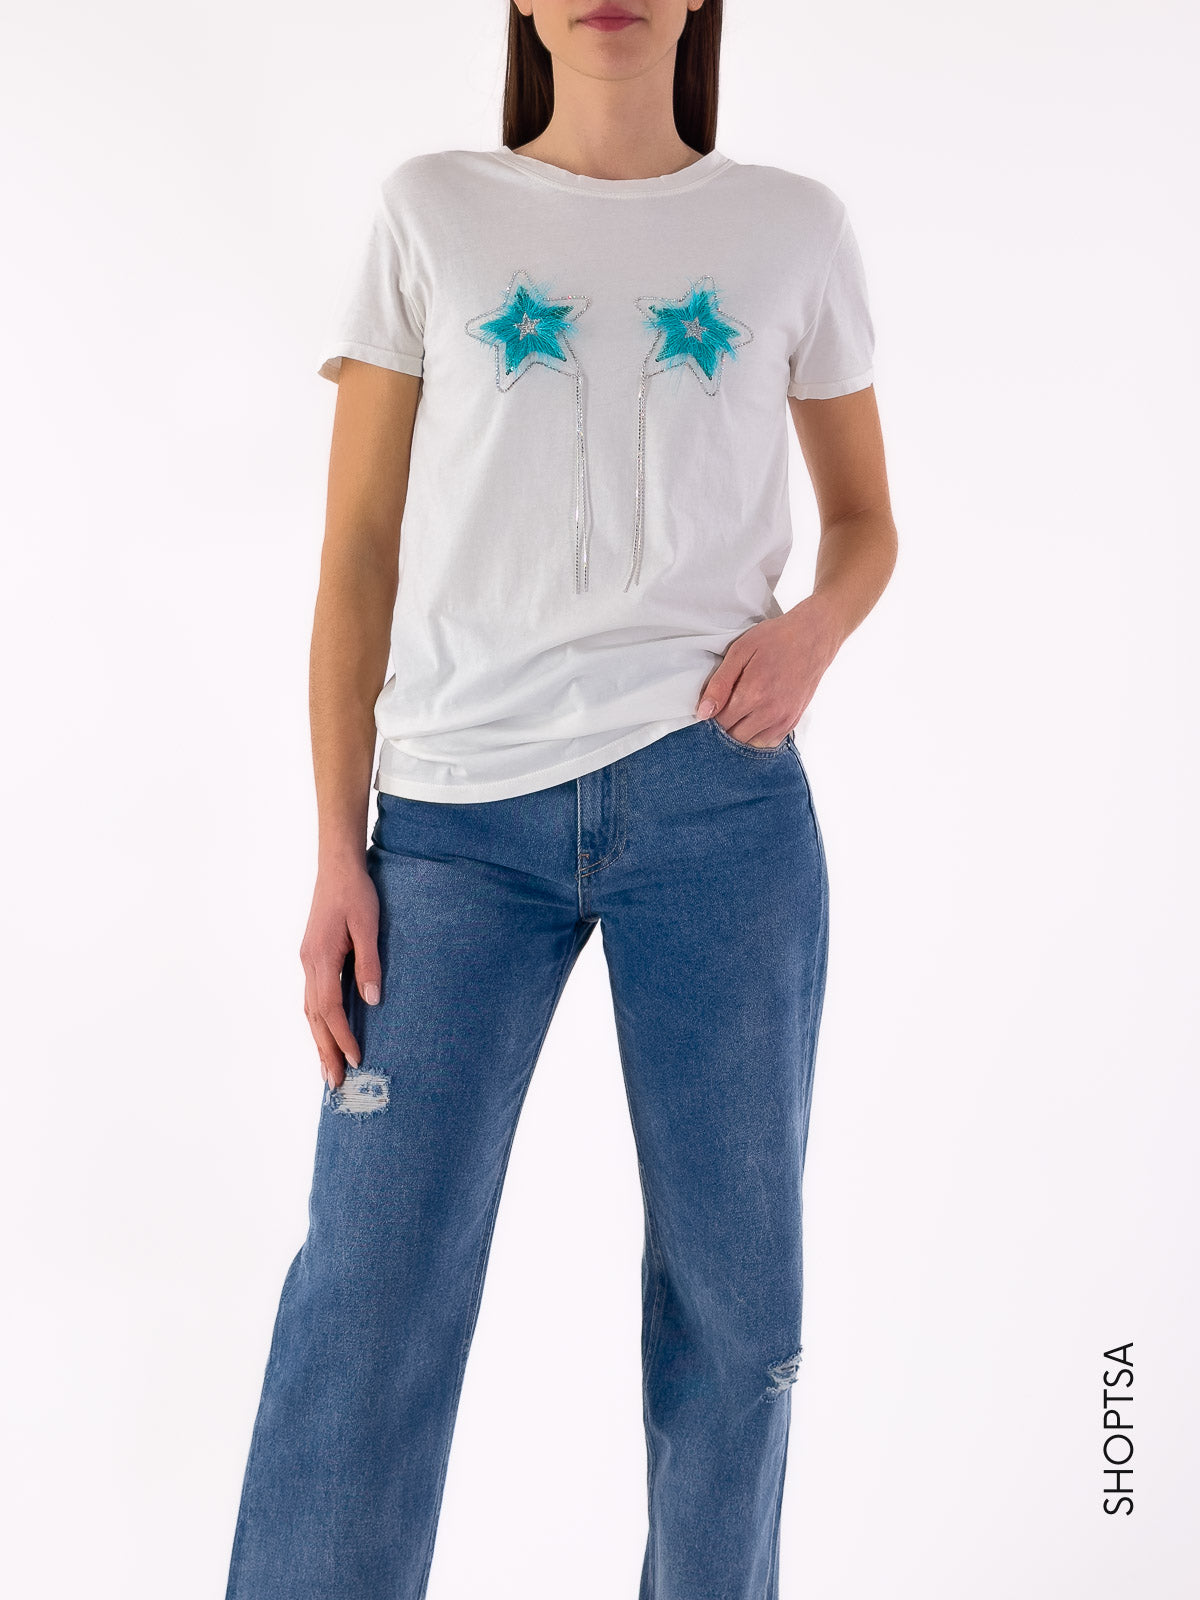 T-shirt stelle Rb0296 - ViCOLO